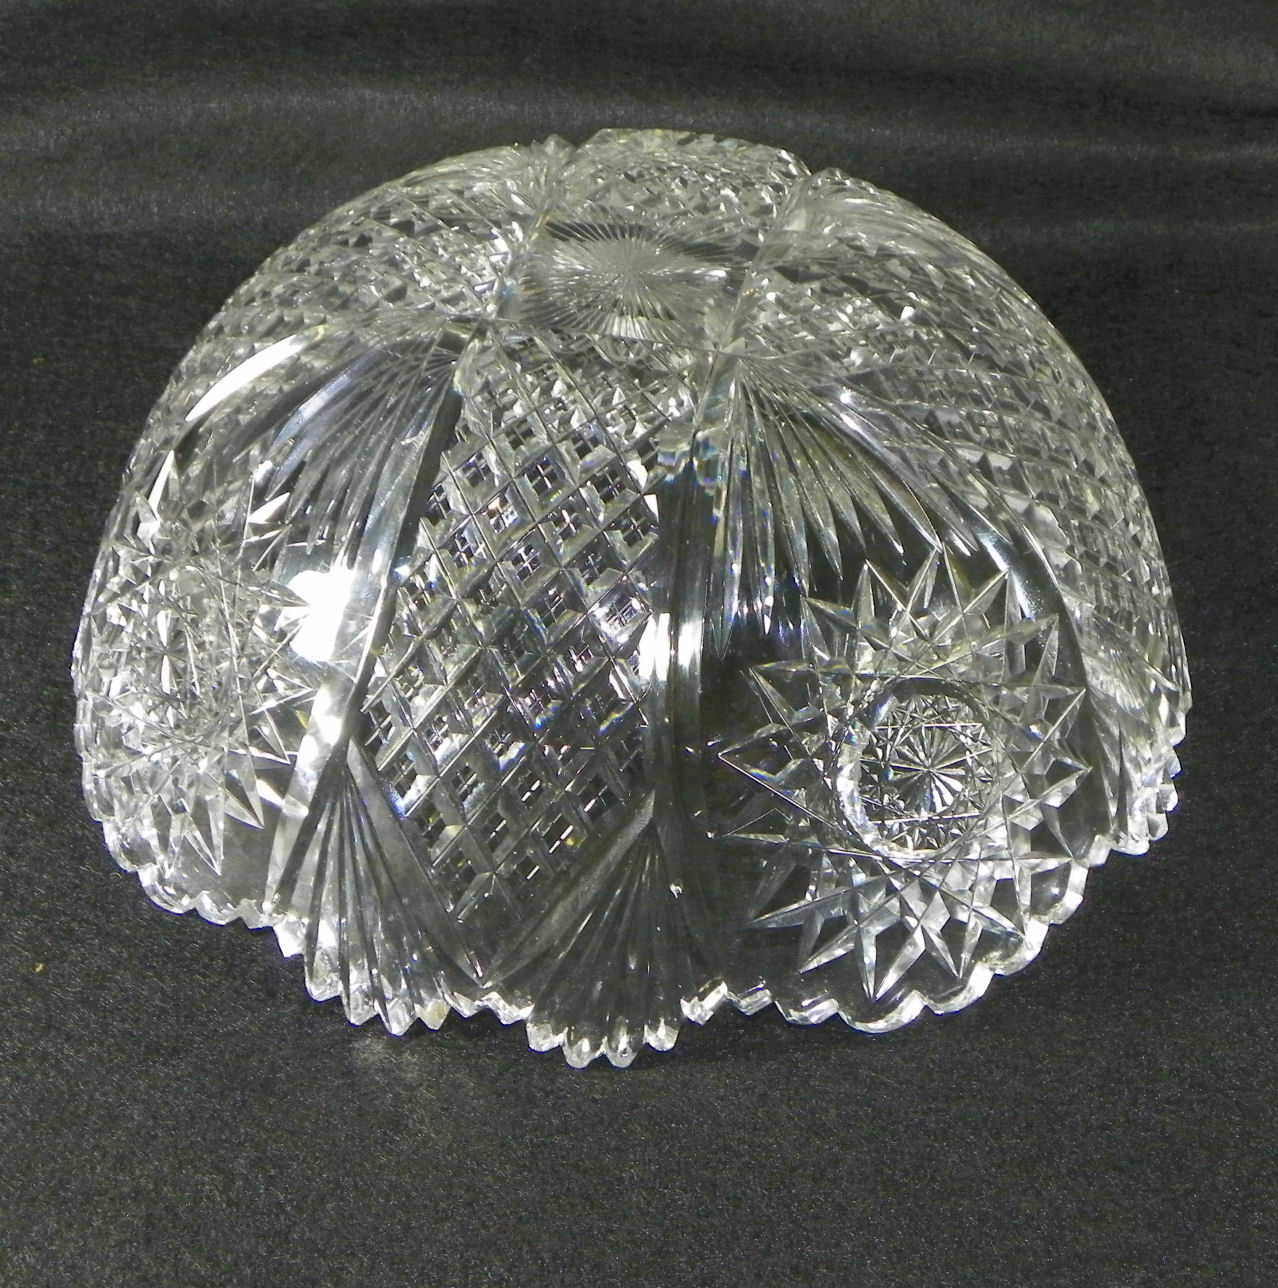 Bargain John's Antiques | Large Antique Cut Glass Bowl marked Libbey